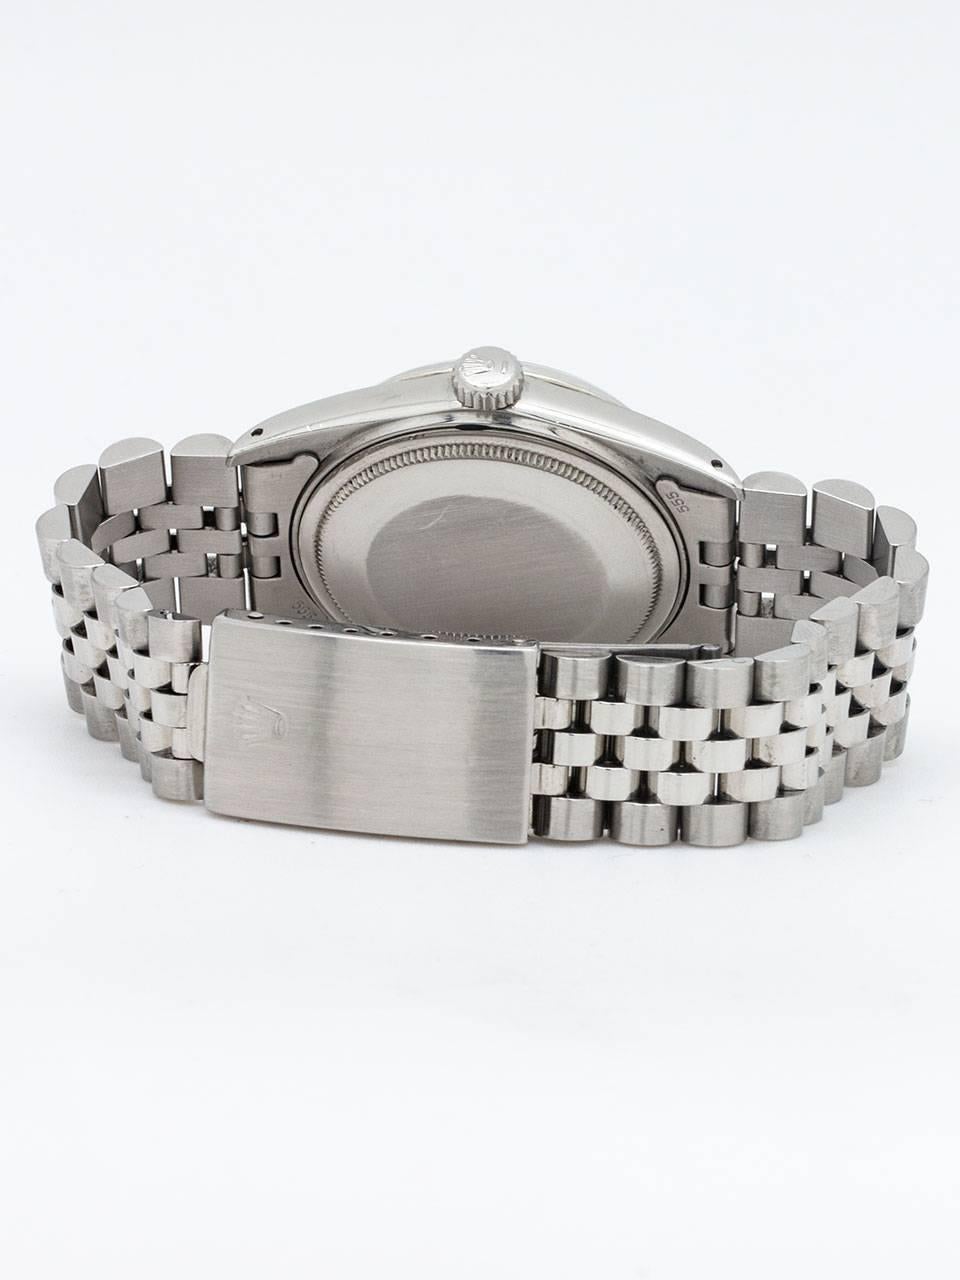 Women's or Men's Rolex Stainless Steel Datejust Wristwatch Ref 16014 1980 For Sale